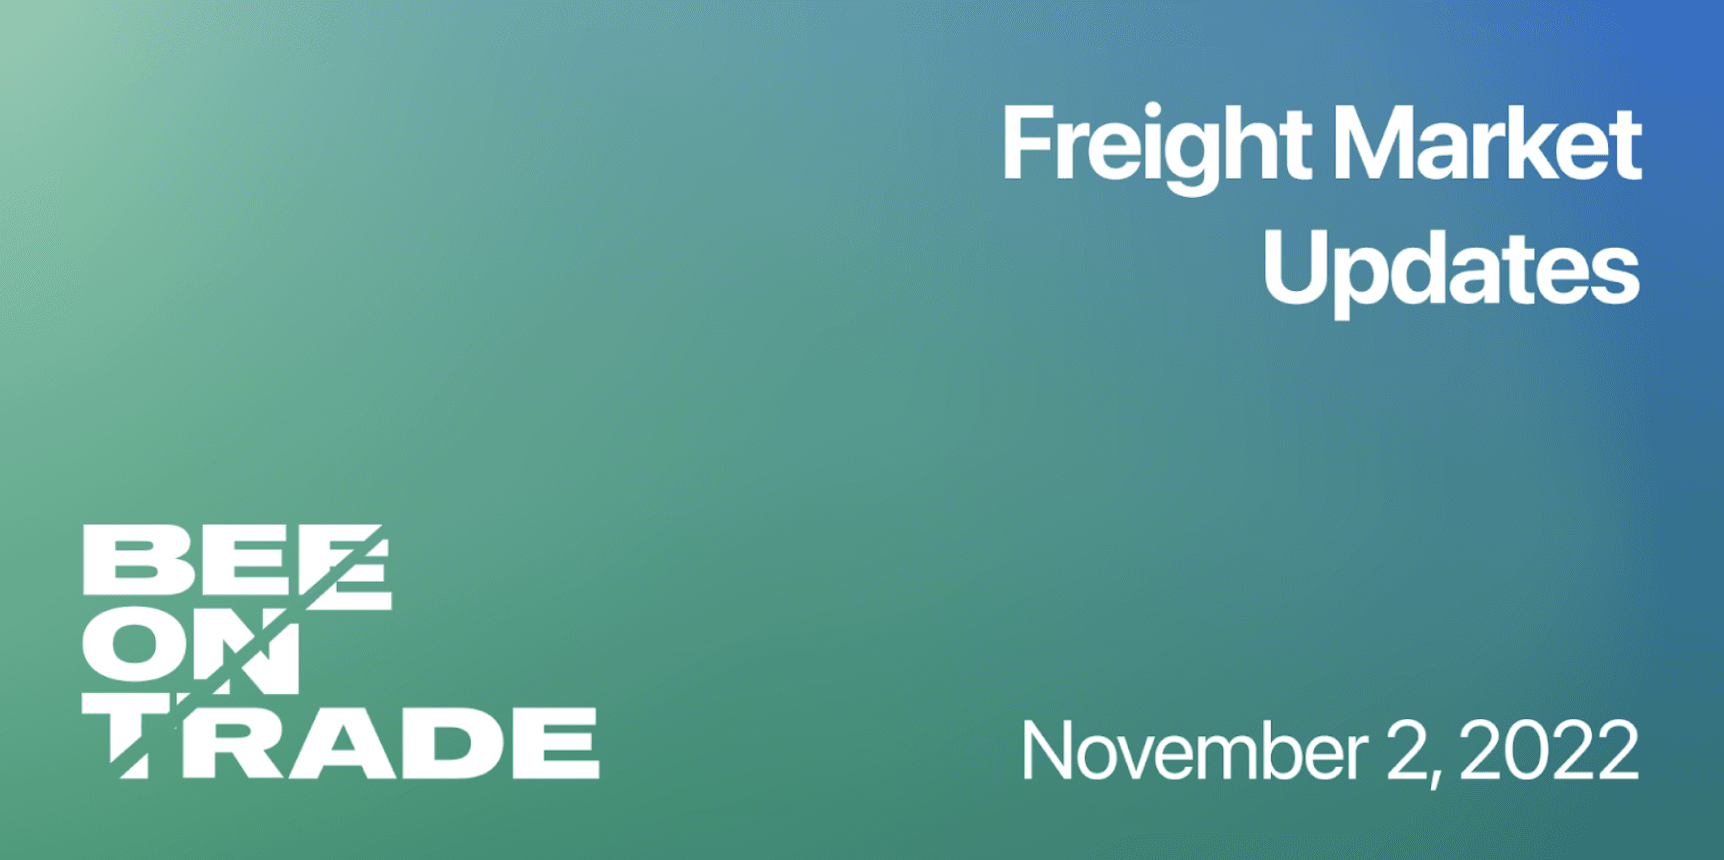 Freight Market Update - November 2, 2022